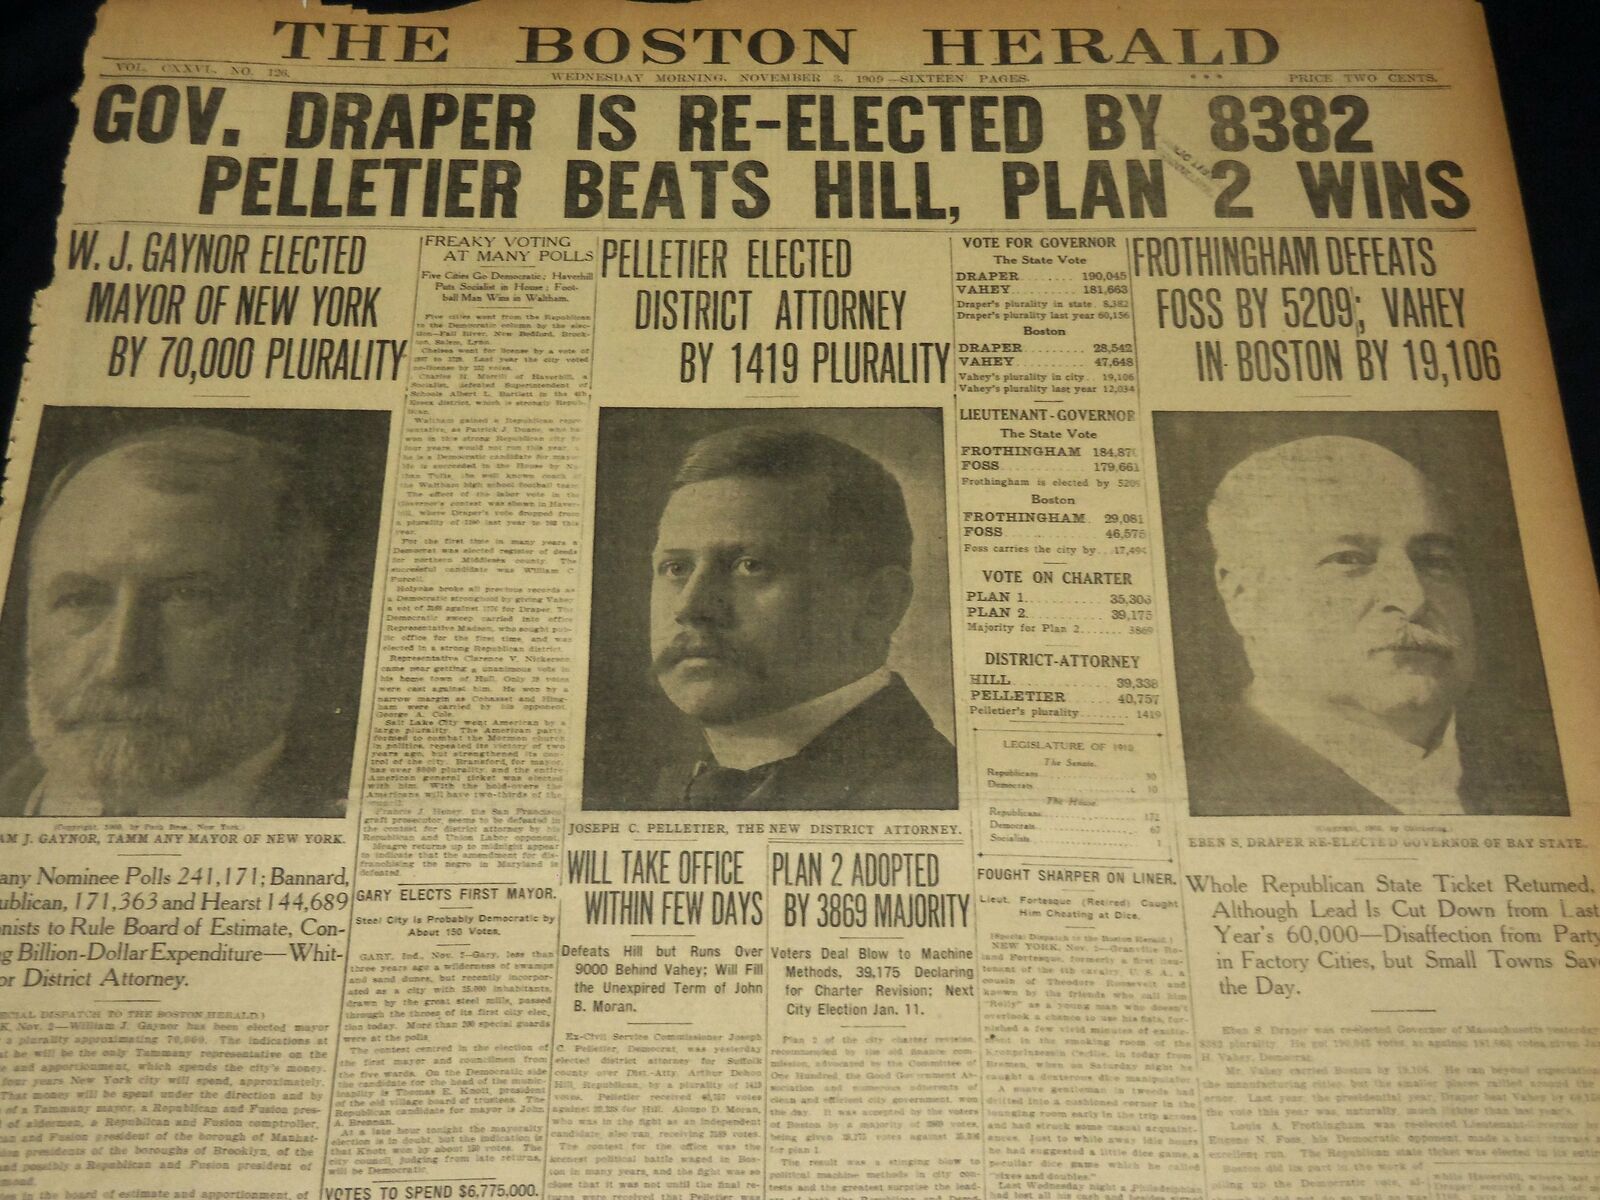 1909 NOVEMBER 3 THE BOSTON HERALD - GOV. DRAPER RE-ELECTED W. J. GAYNOR - BH 393